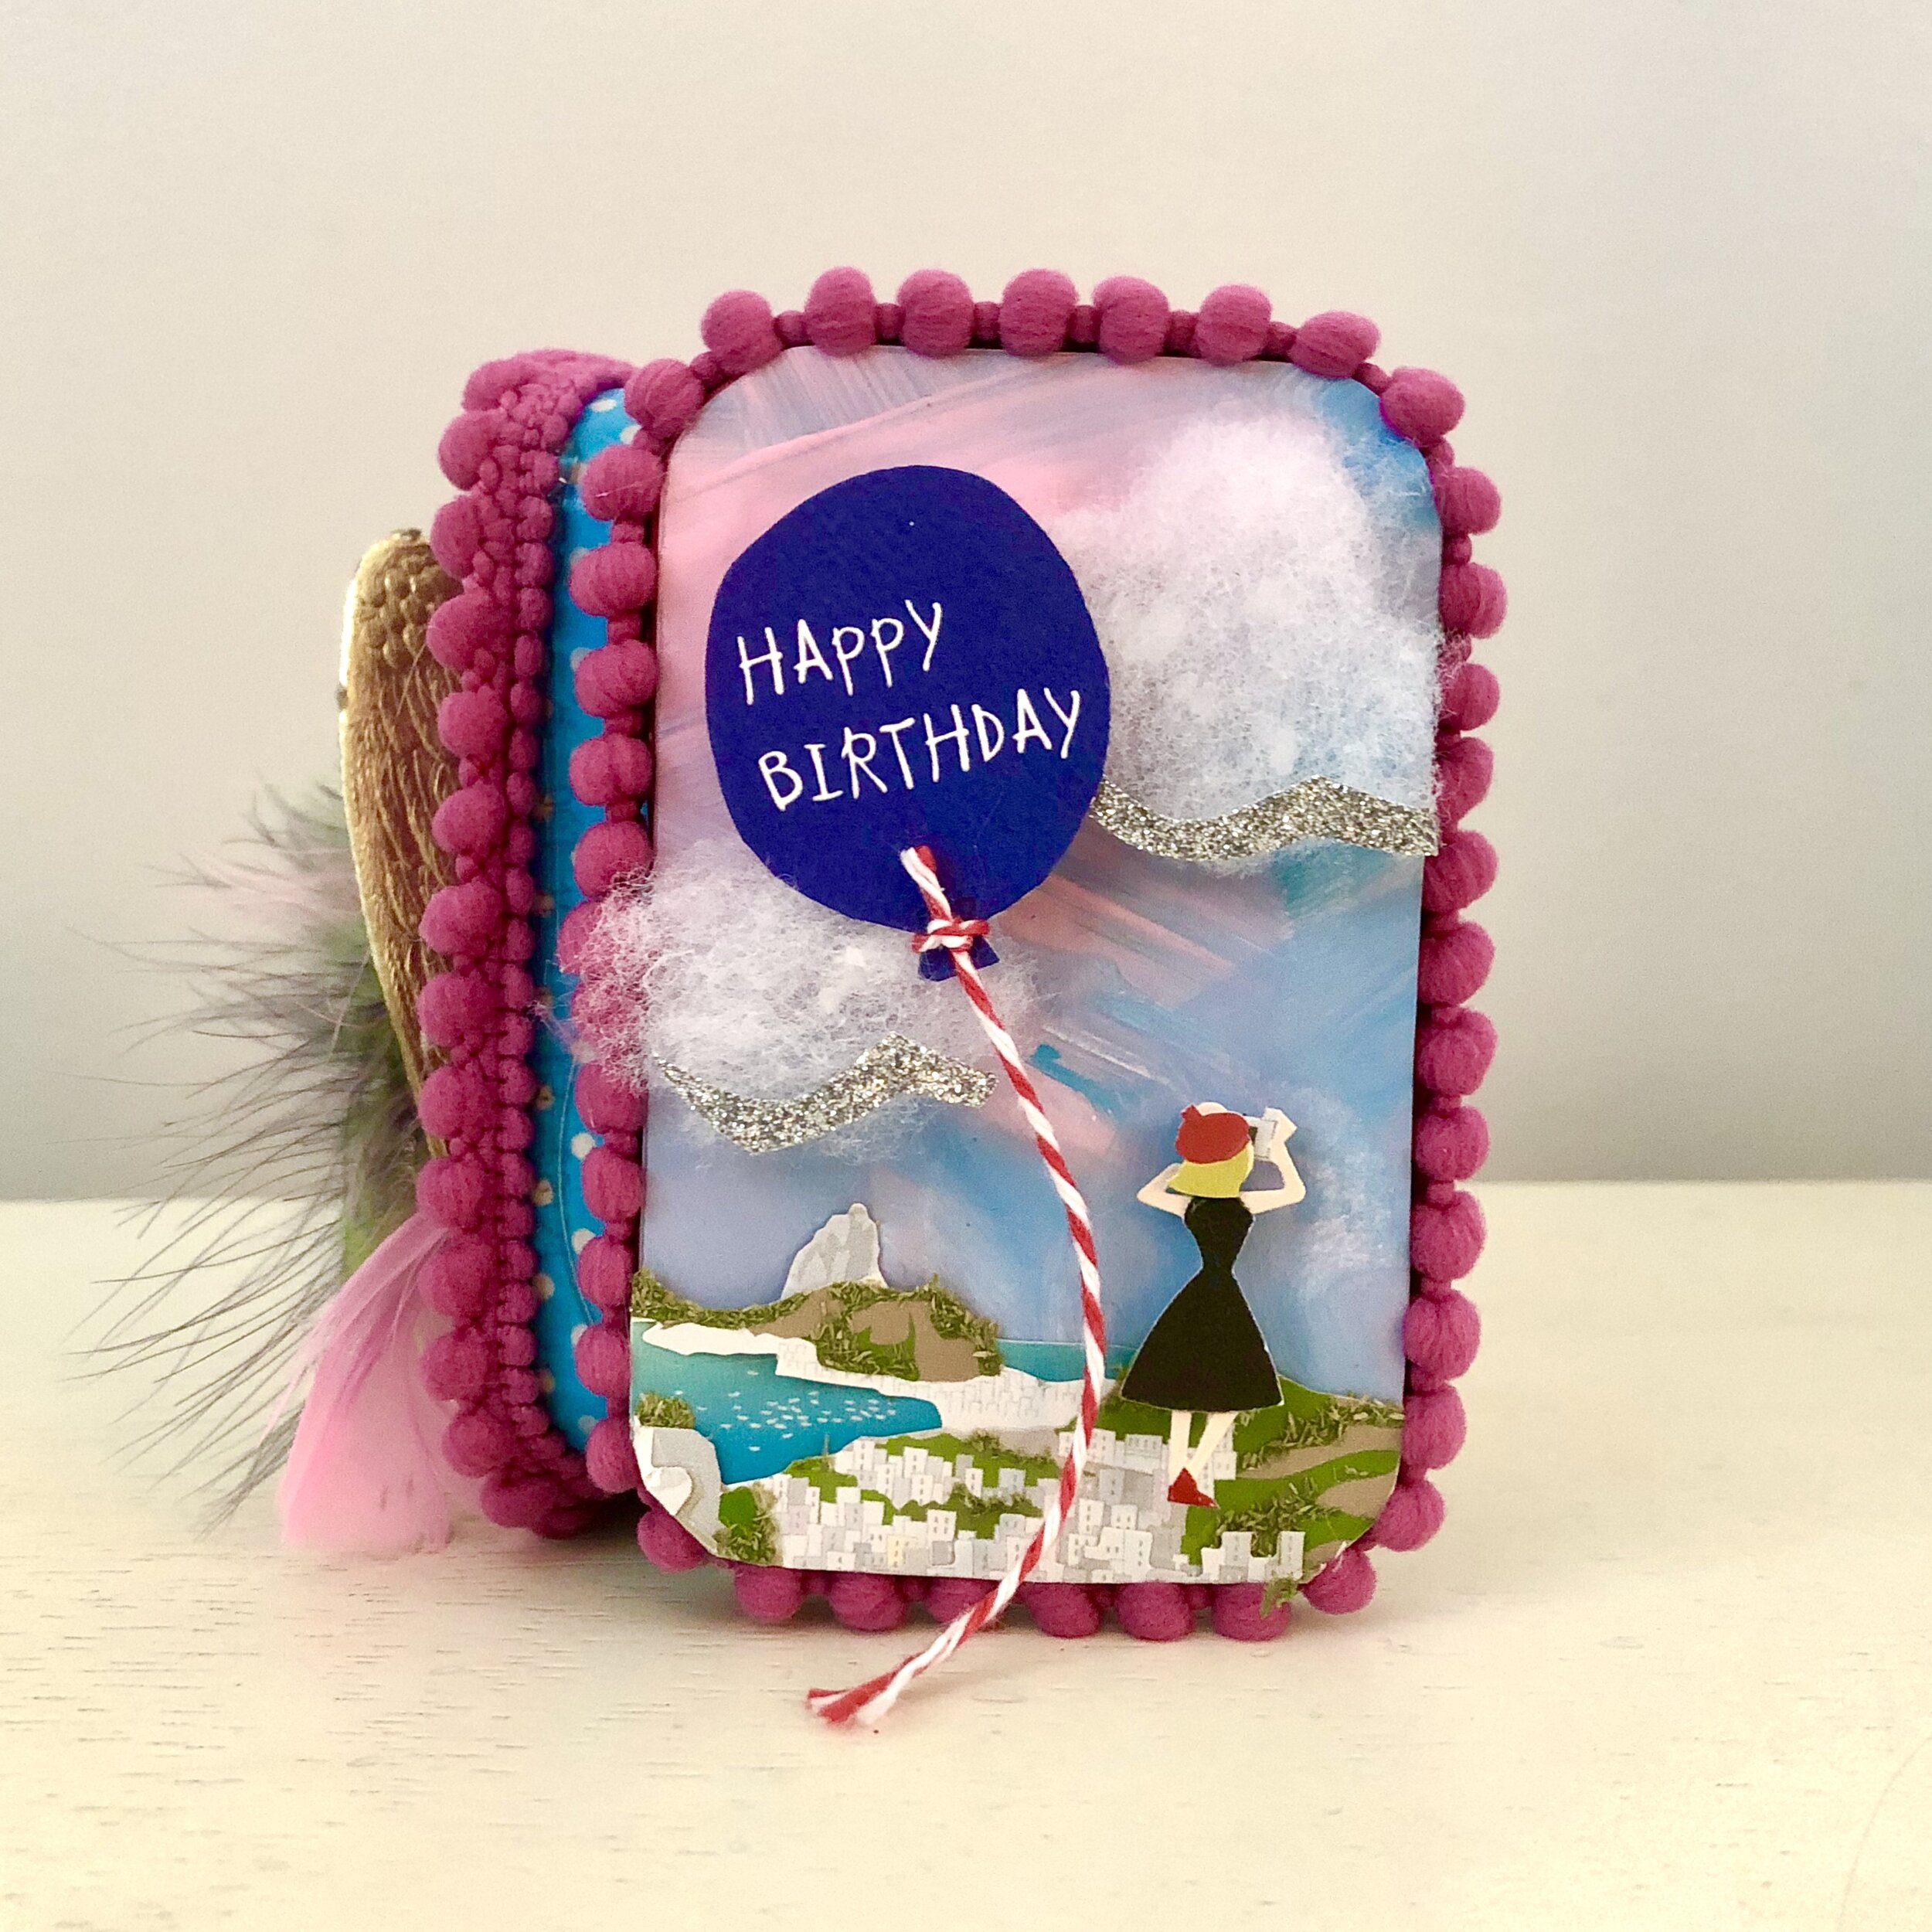 Happy Birthday Card Altoid Tin Diorama (front), 2019